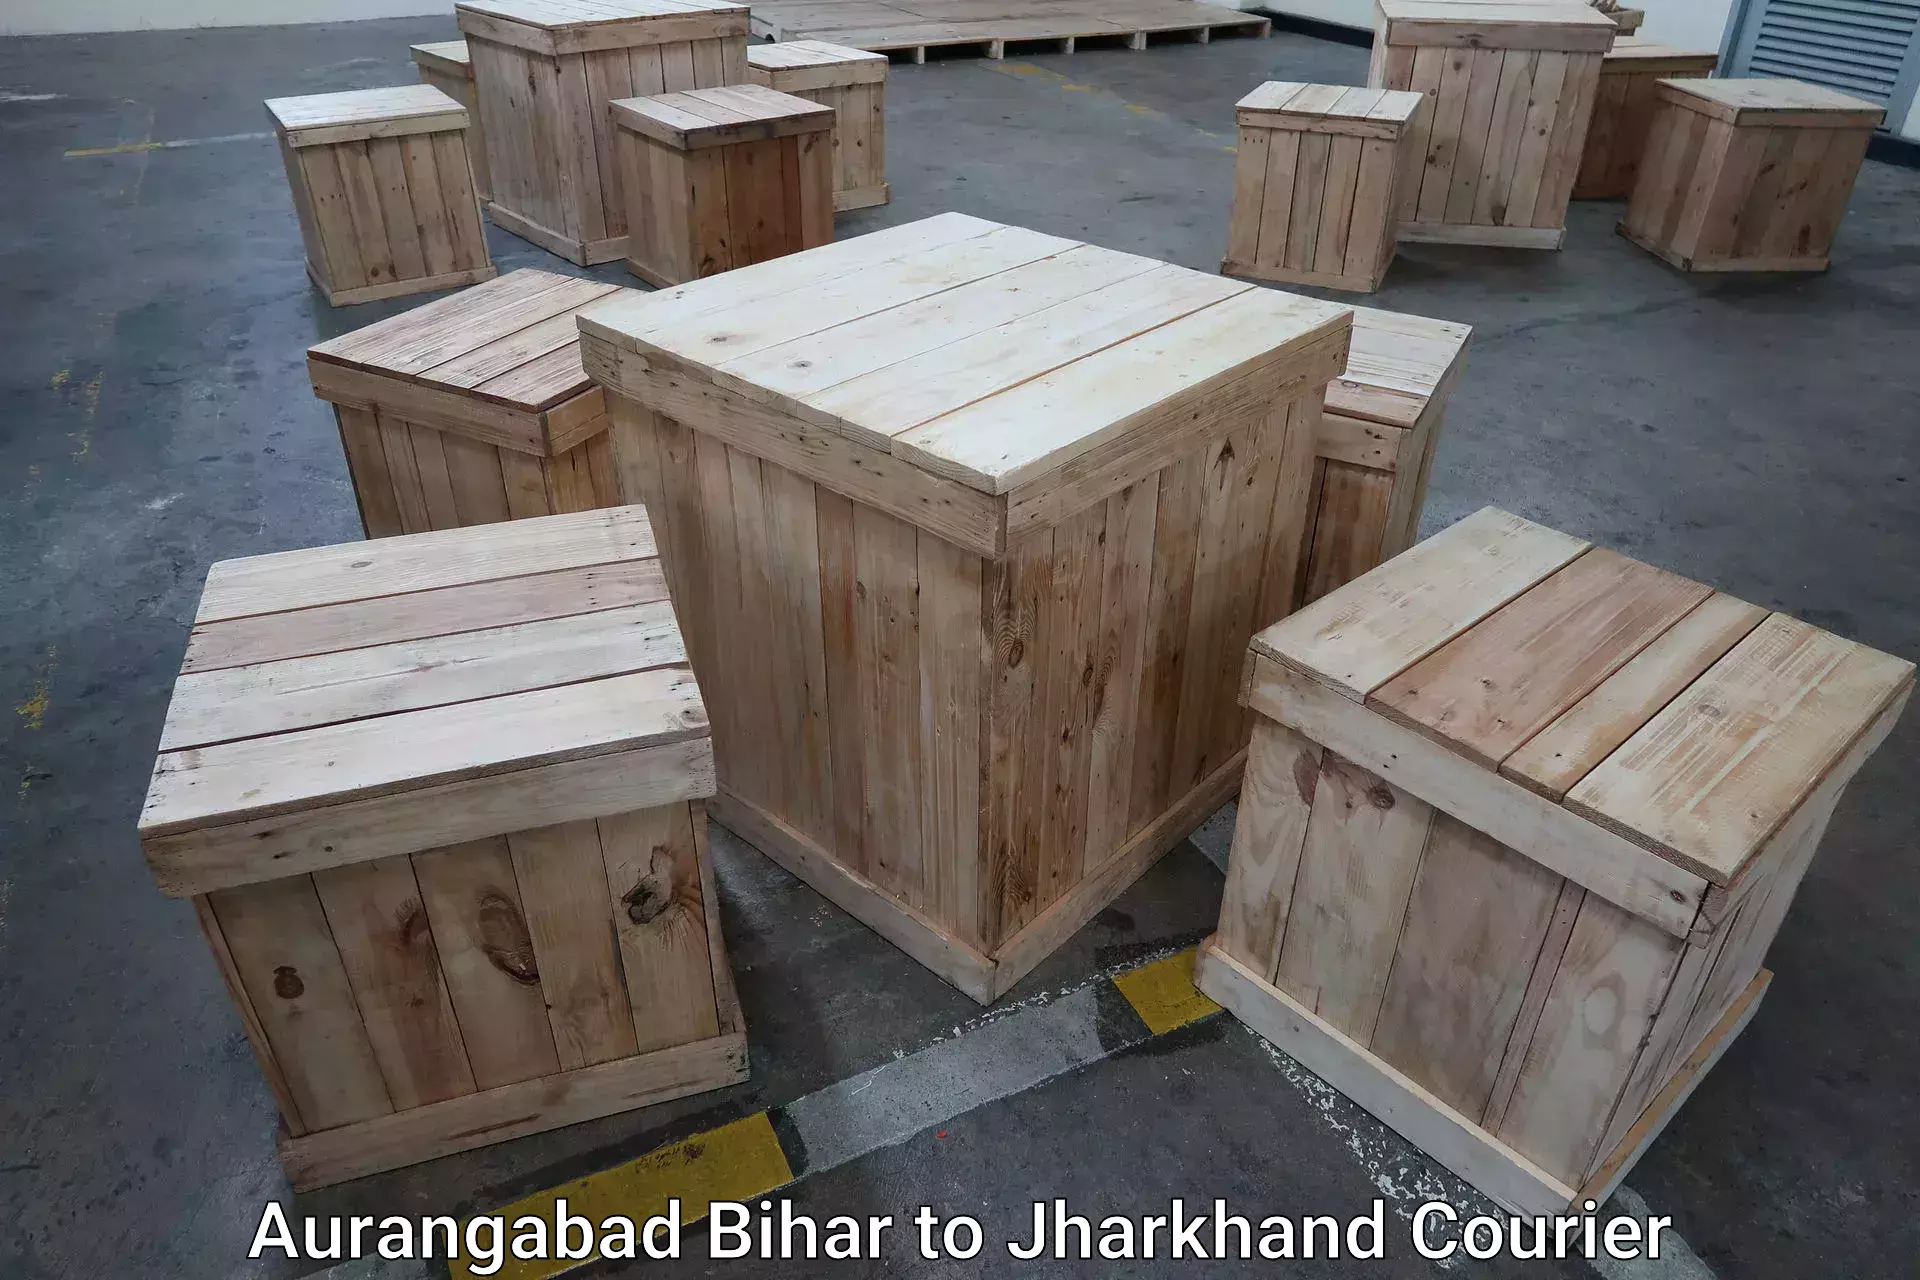 Luggage shipment specialists Aurangabad Bihar to Chatra